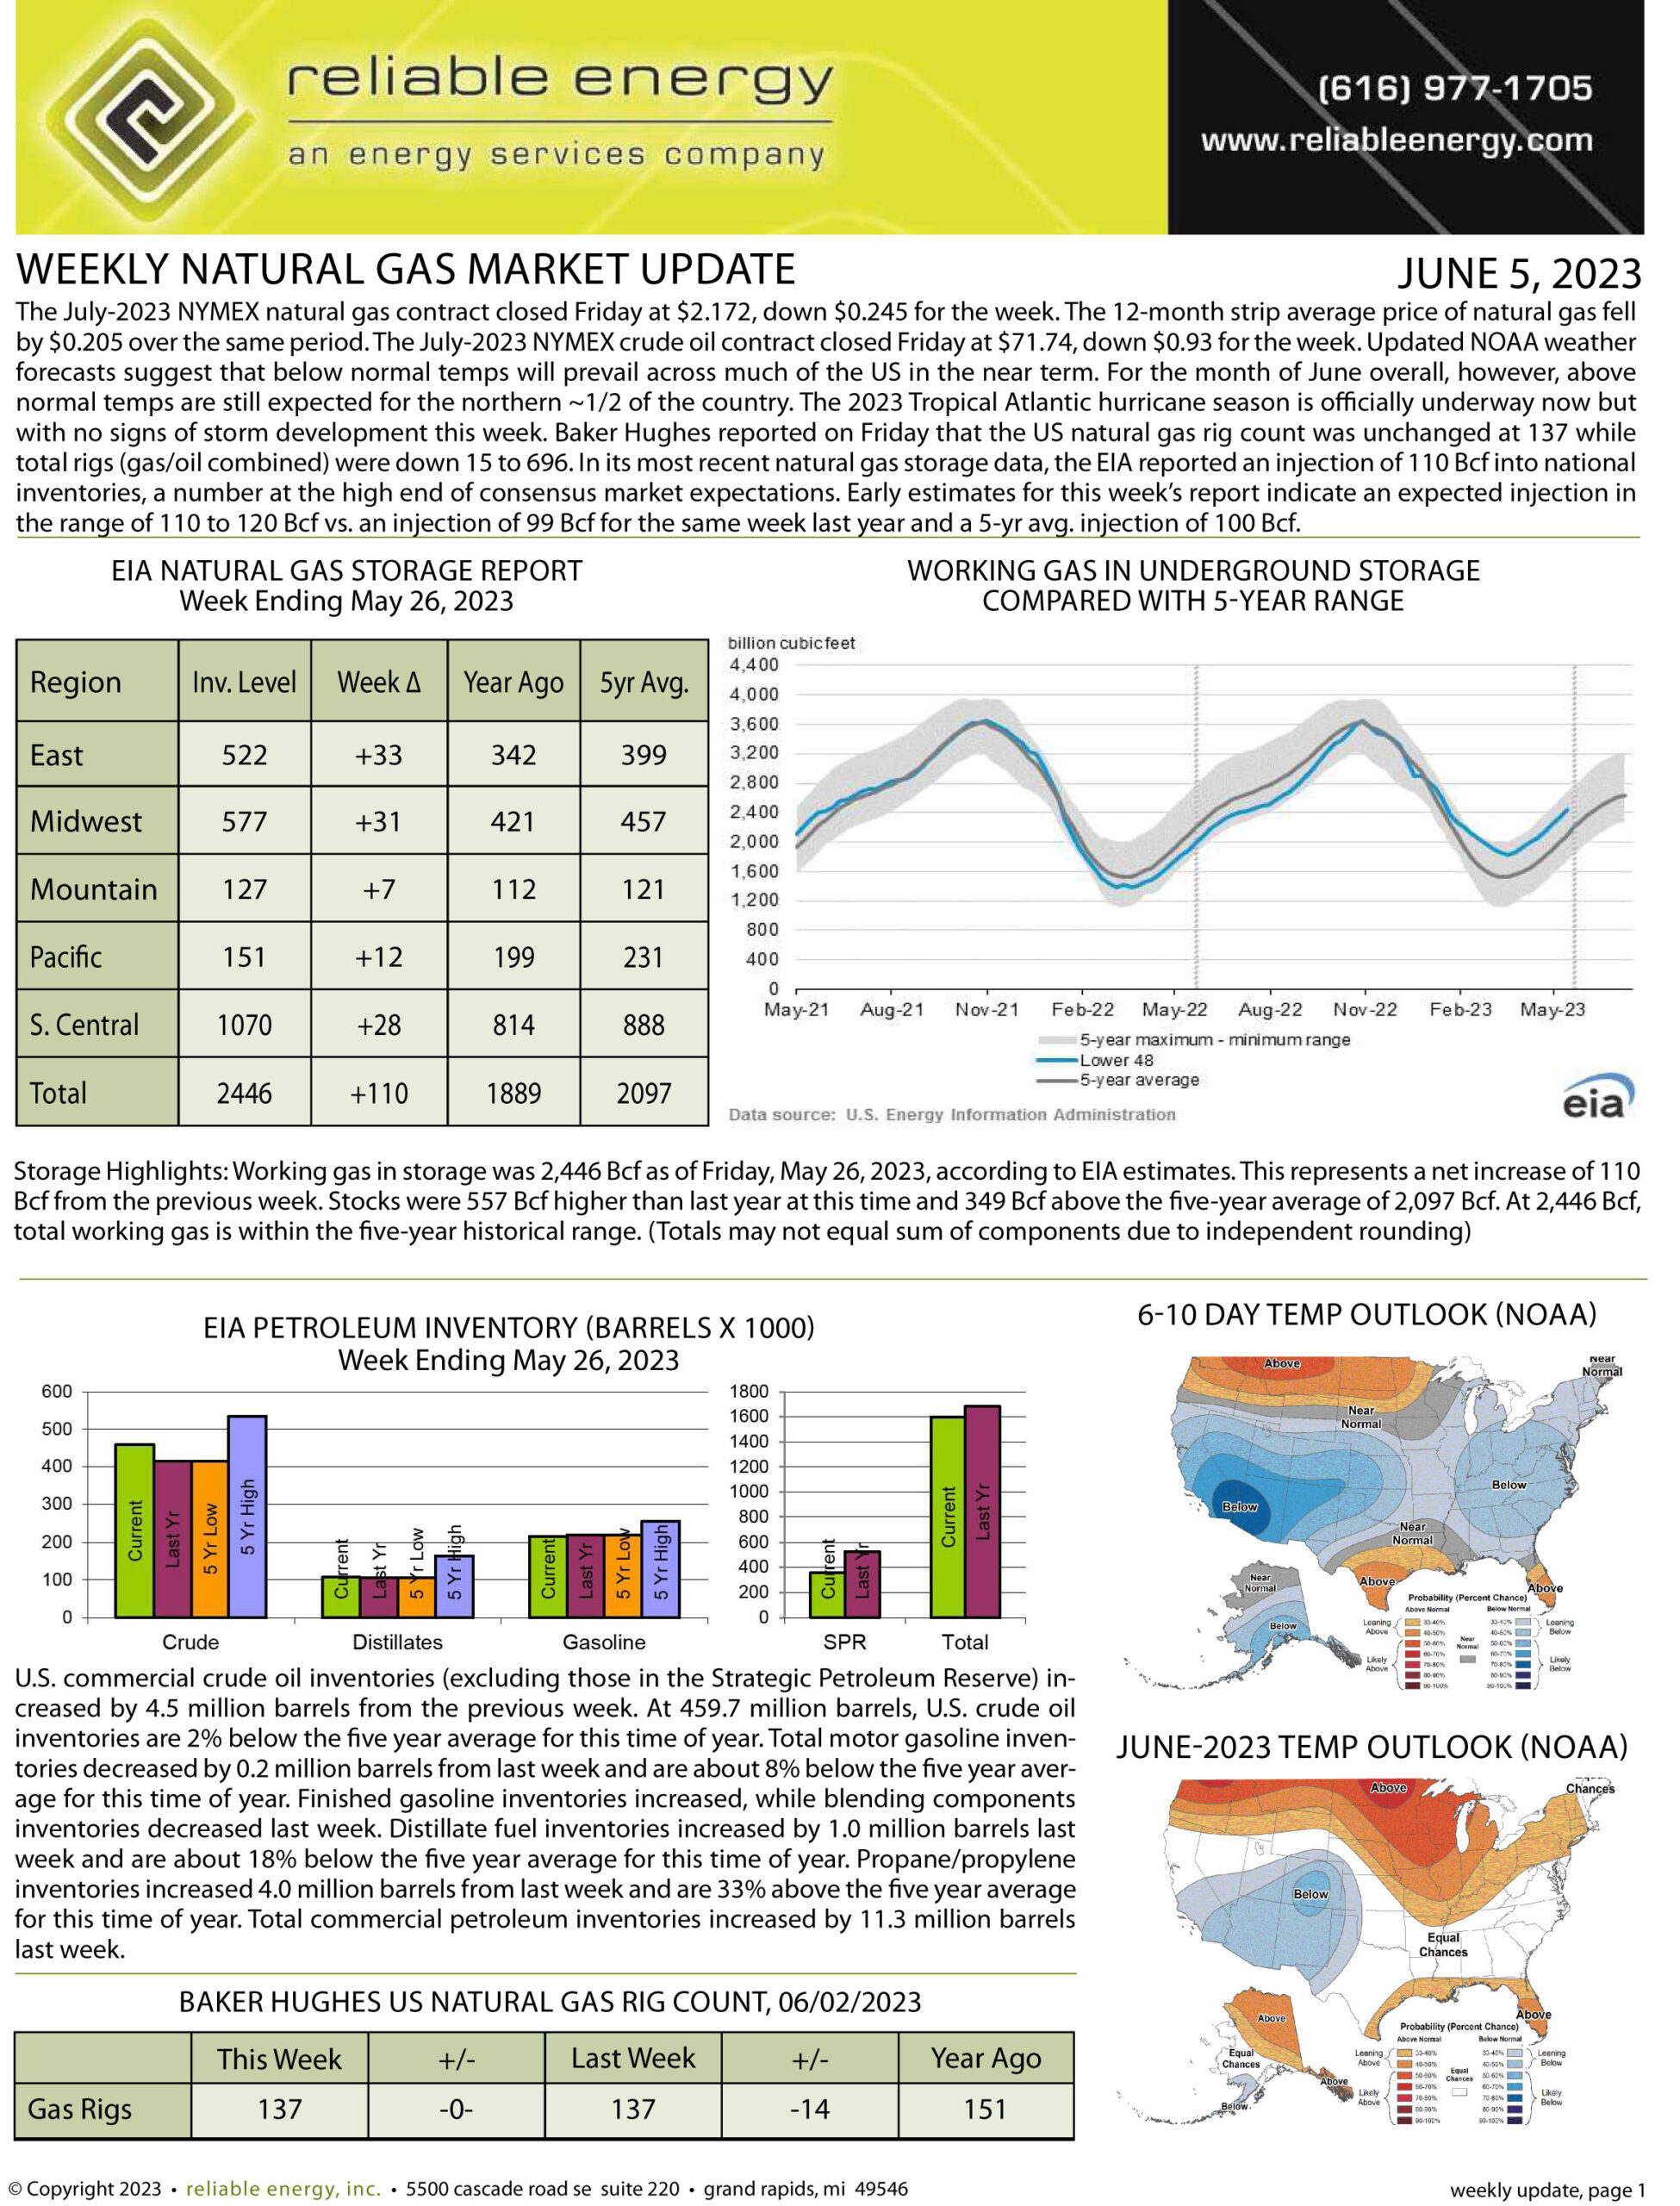 Natural Gas Market Update – June 5, 2023